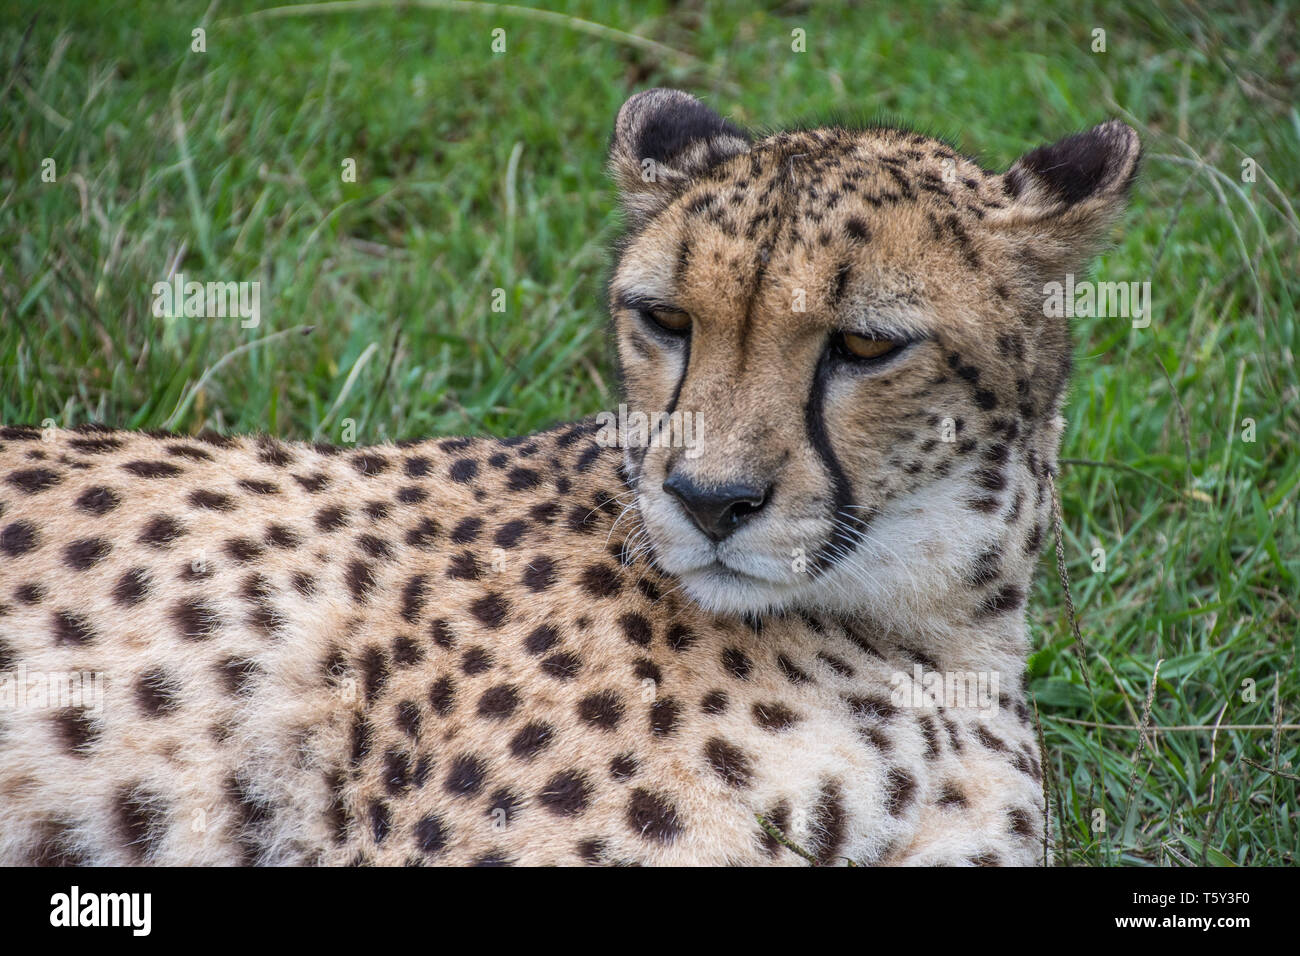 Cheetah (Acinonyx jubatus), Tenikwa Wildlife Rehabilitation Centre, Plettenberg Bay, South Africa. Stock Photo